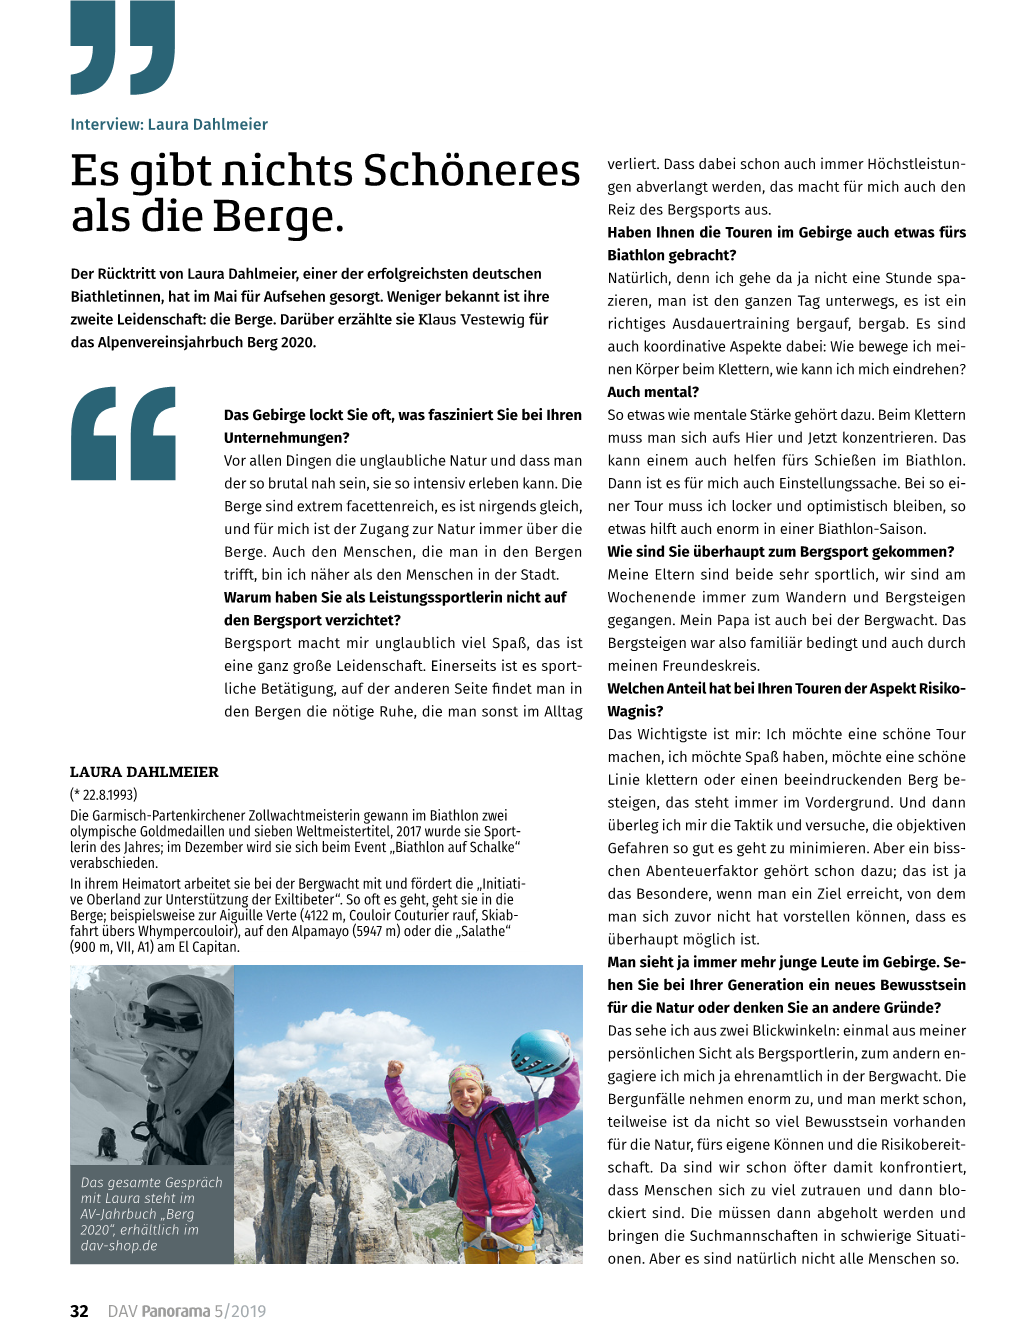 Panorama-5-2019-Bergsport-Heute